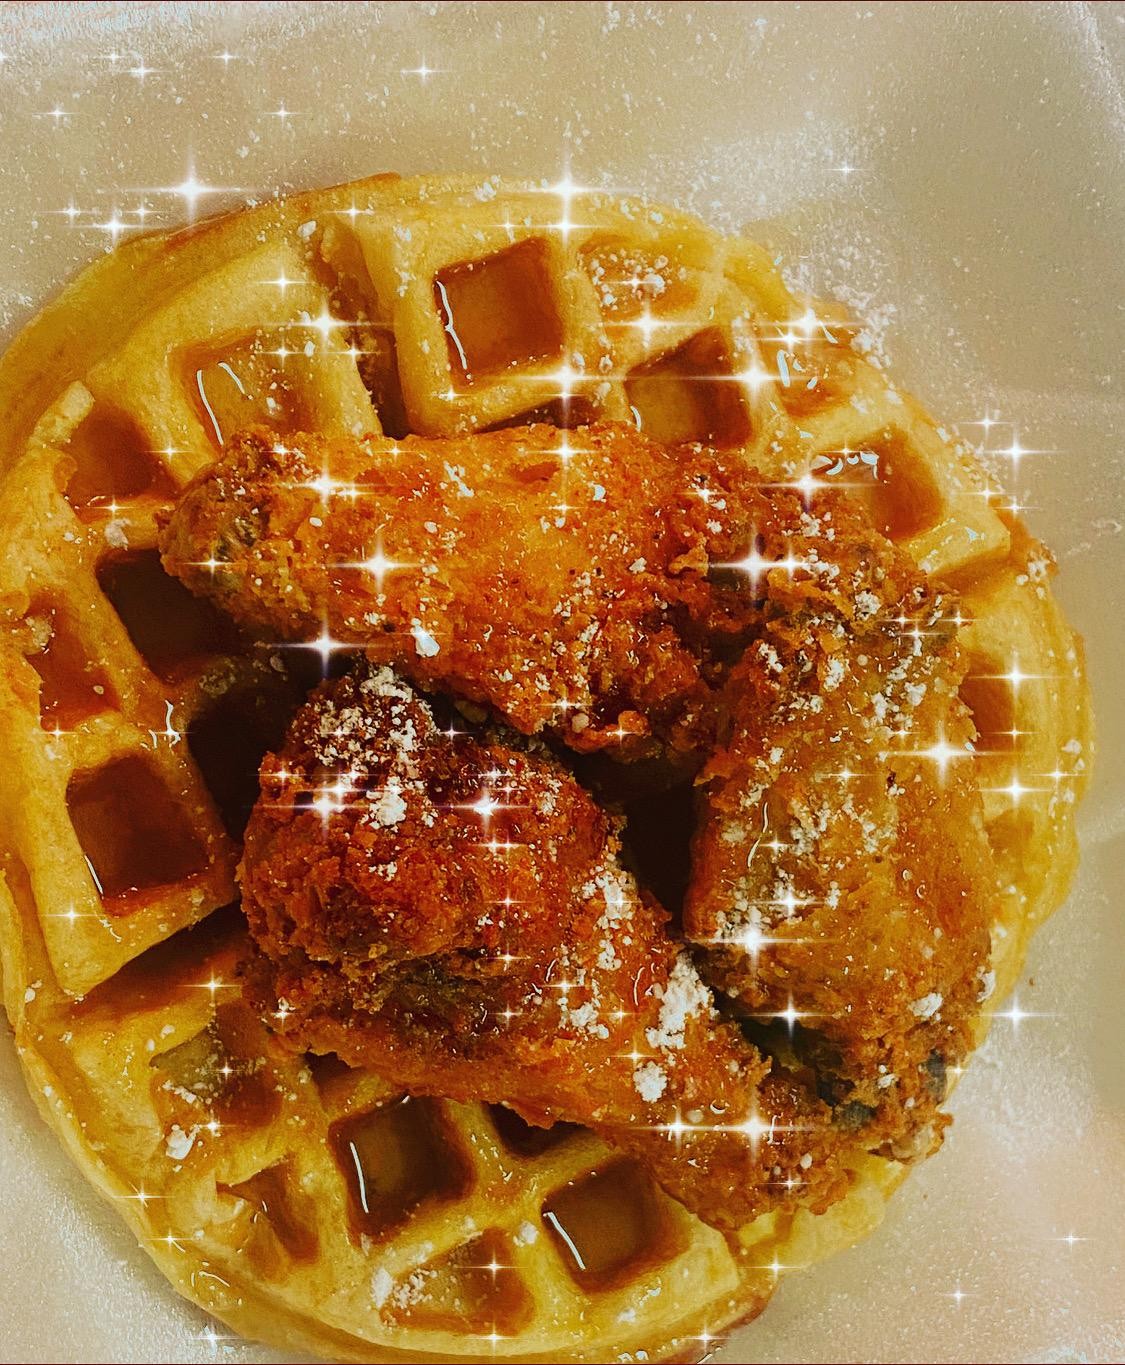 Momma’s Chicken & Waffles